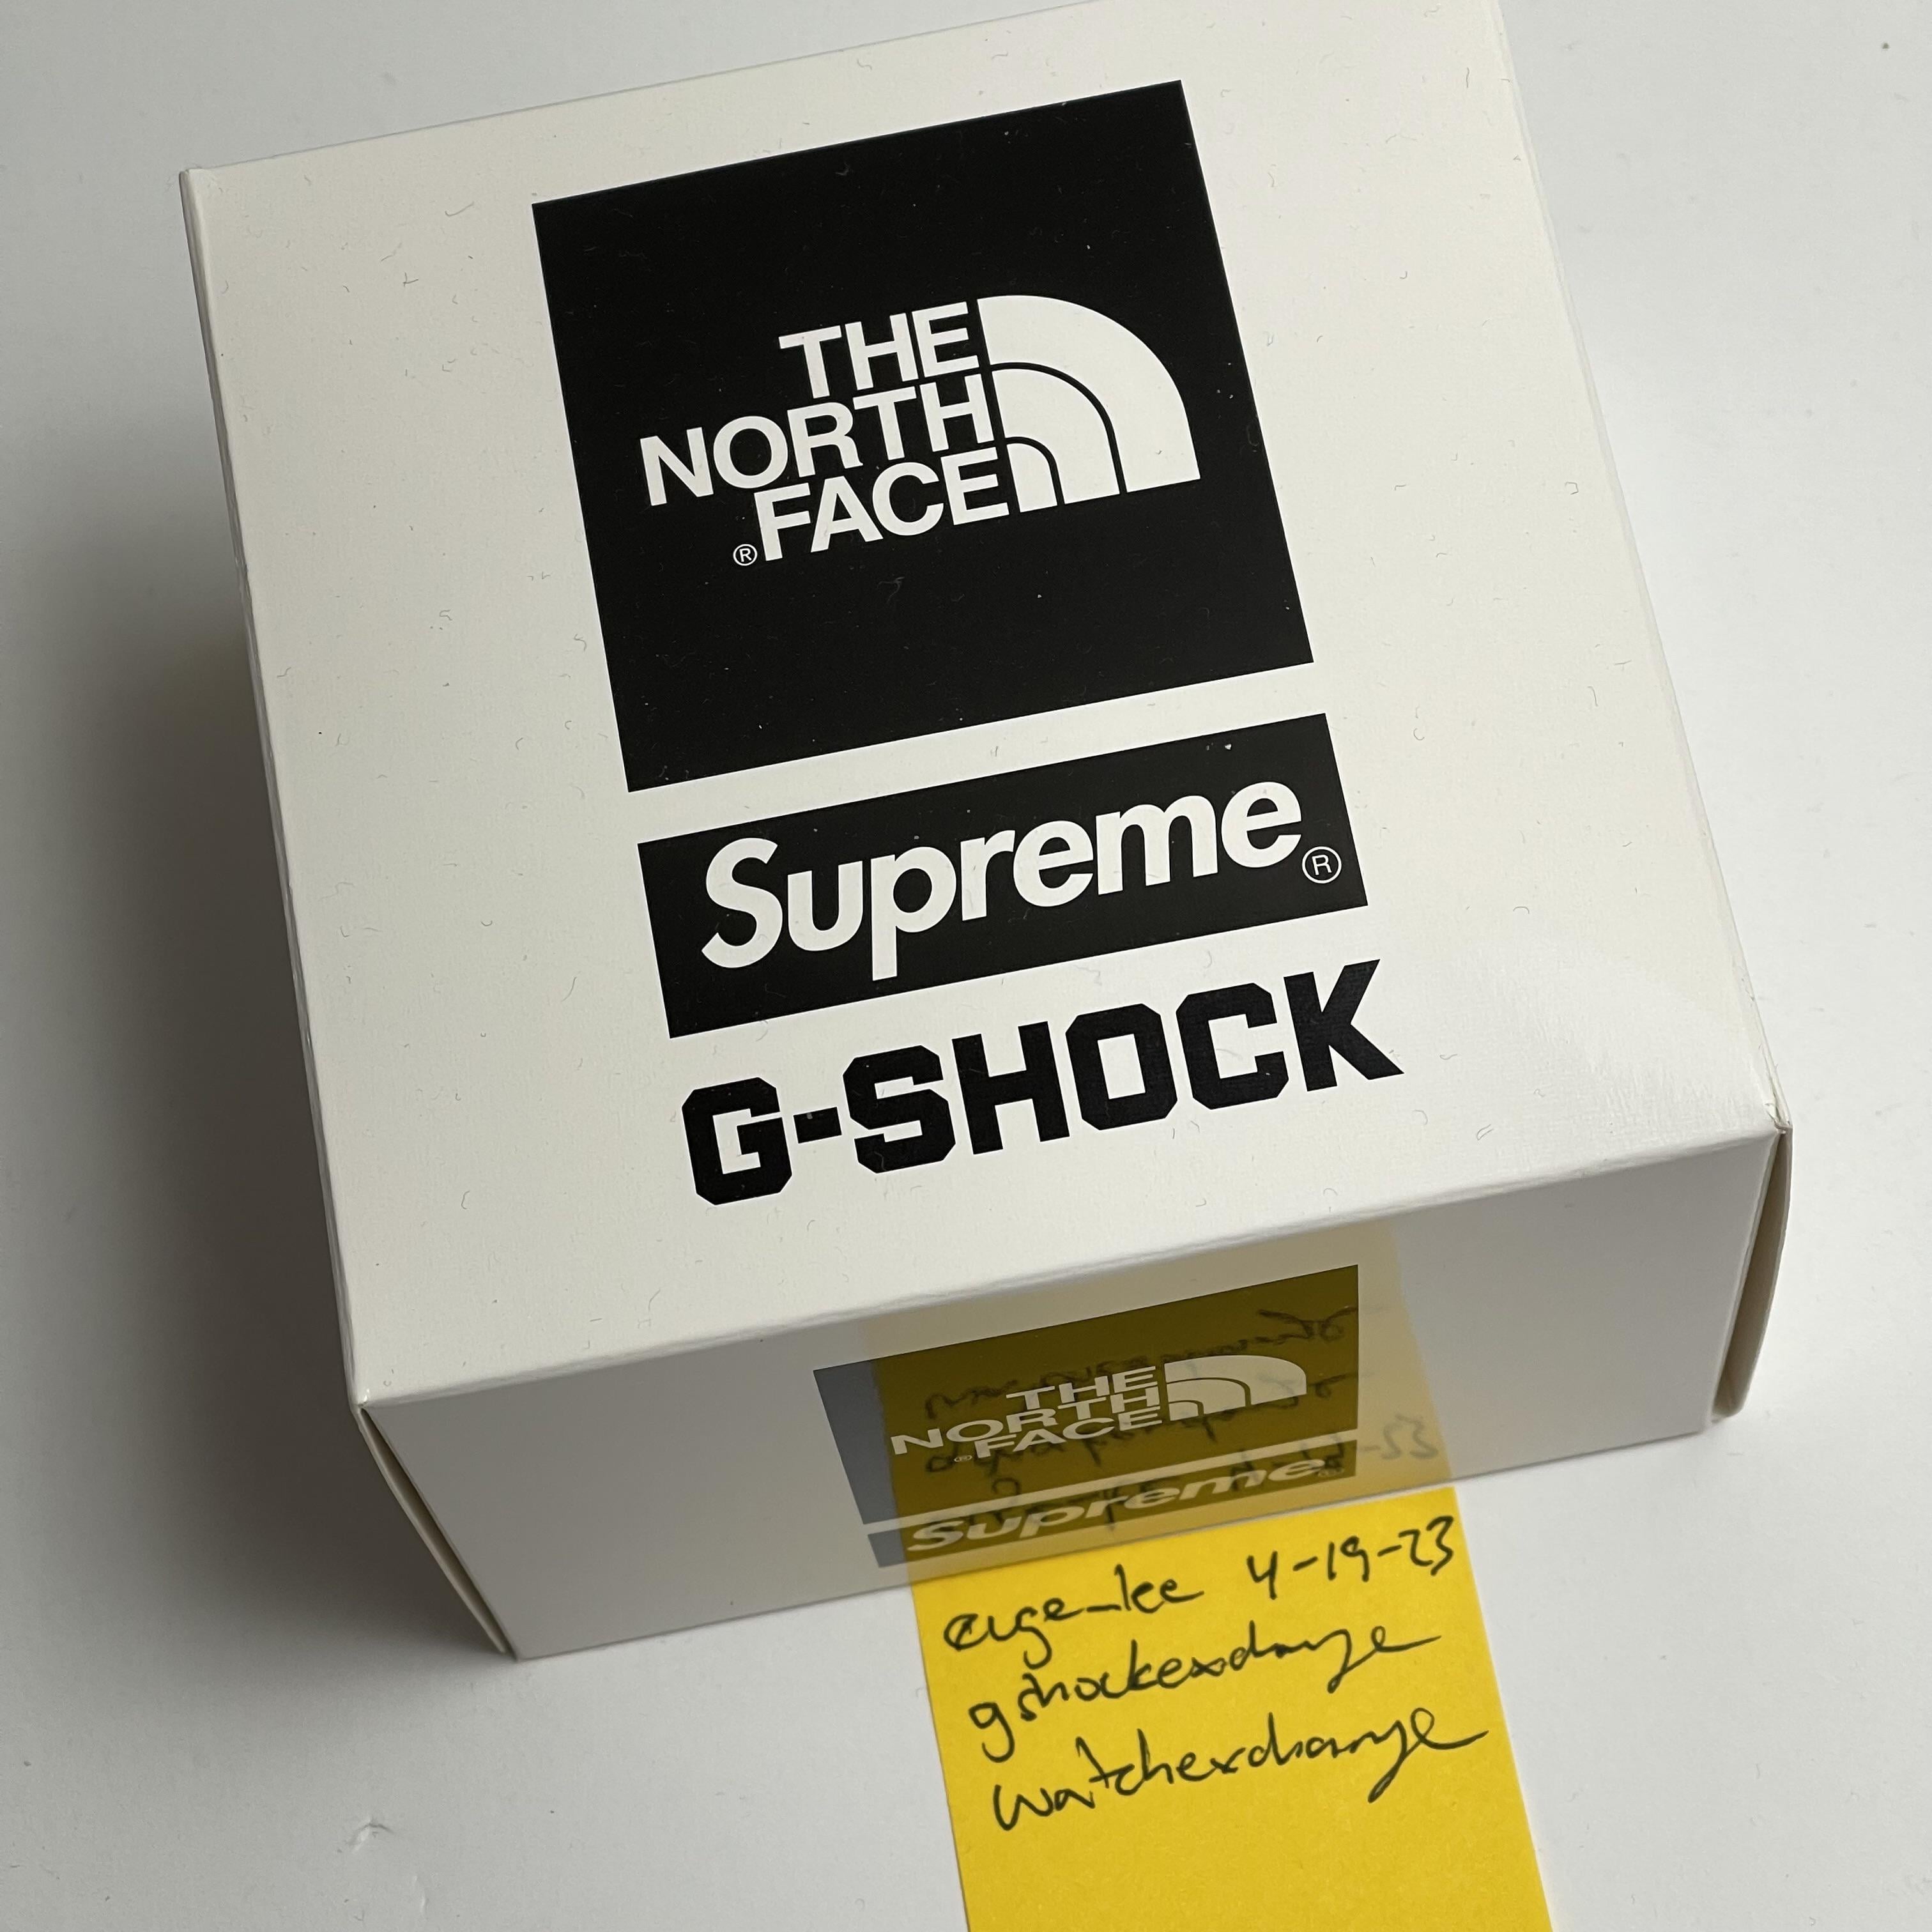 WTS] Supreme x North Face Casio G-Shock DW-6900 in black BNIB